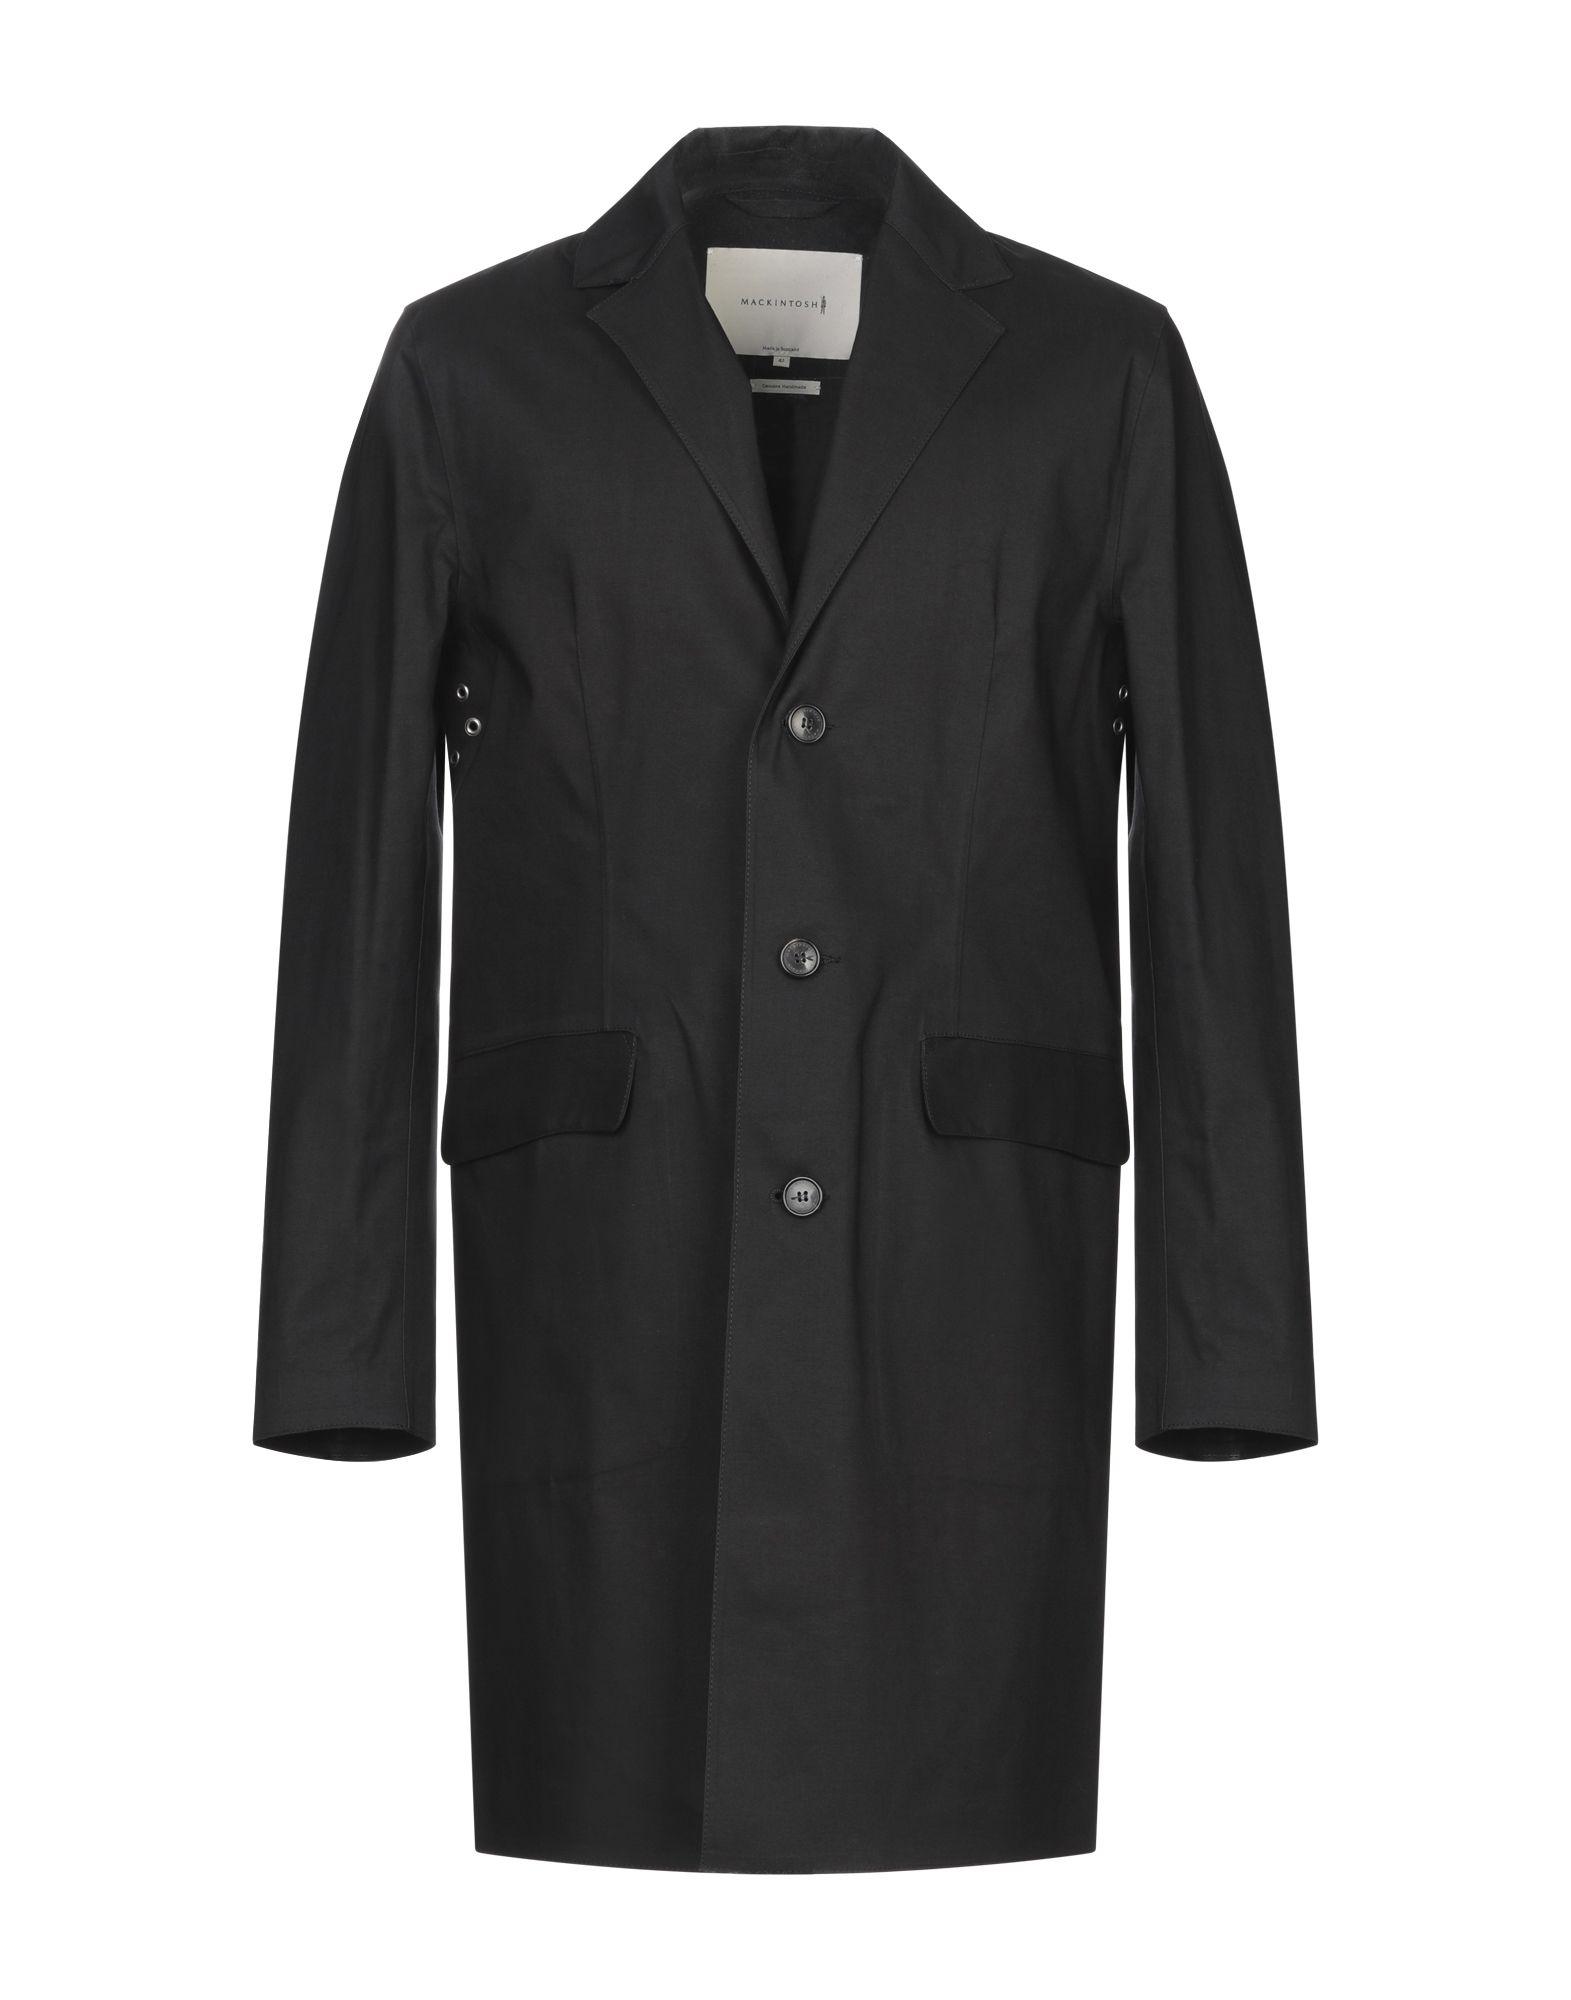 Mackintosh Cotton Overcoat in Black for Men - Lyst